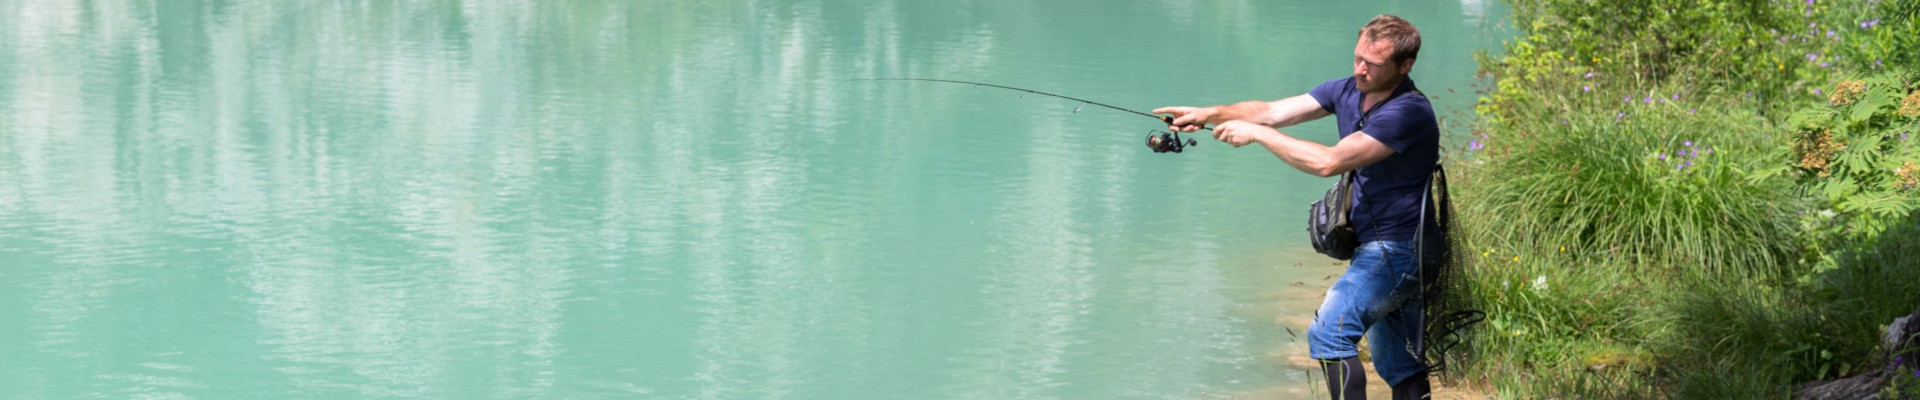 Water sports, Fishing